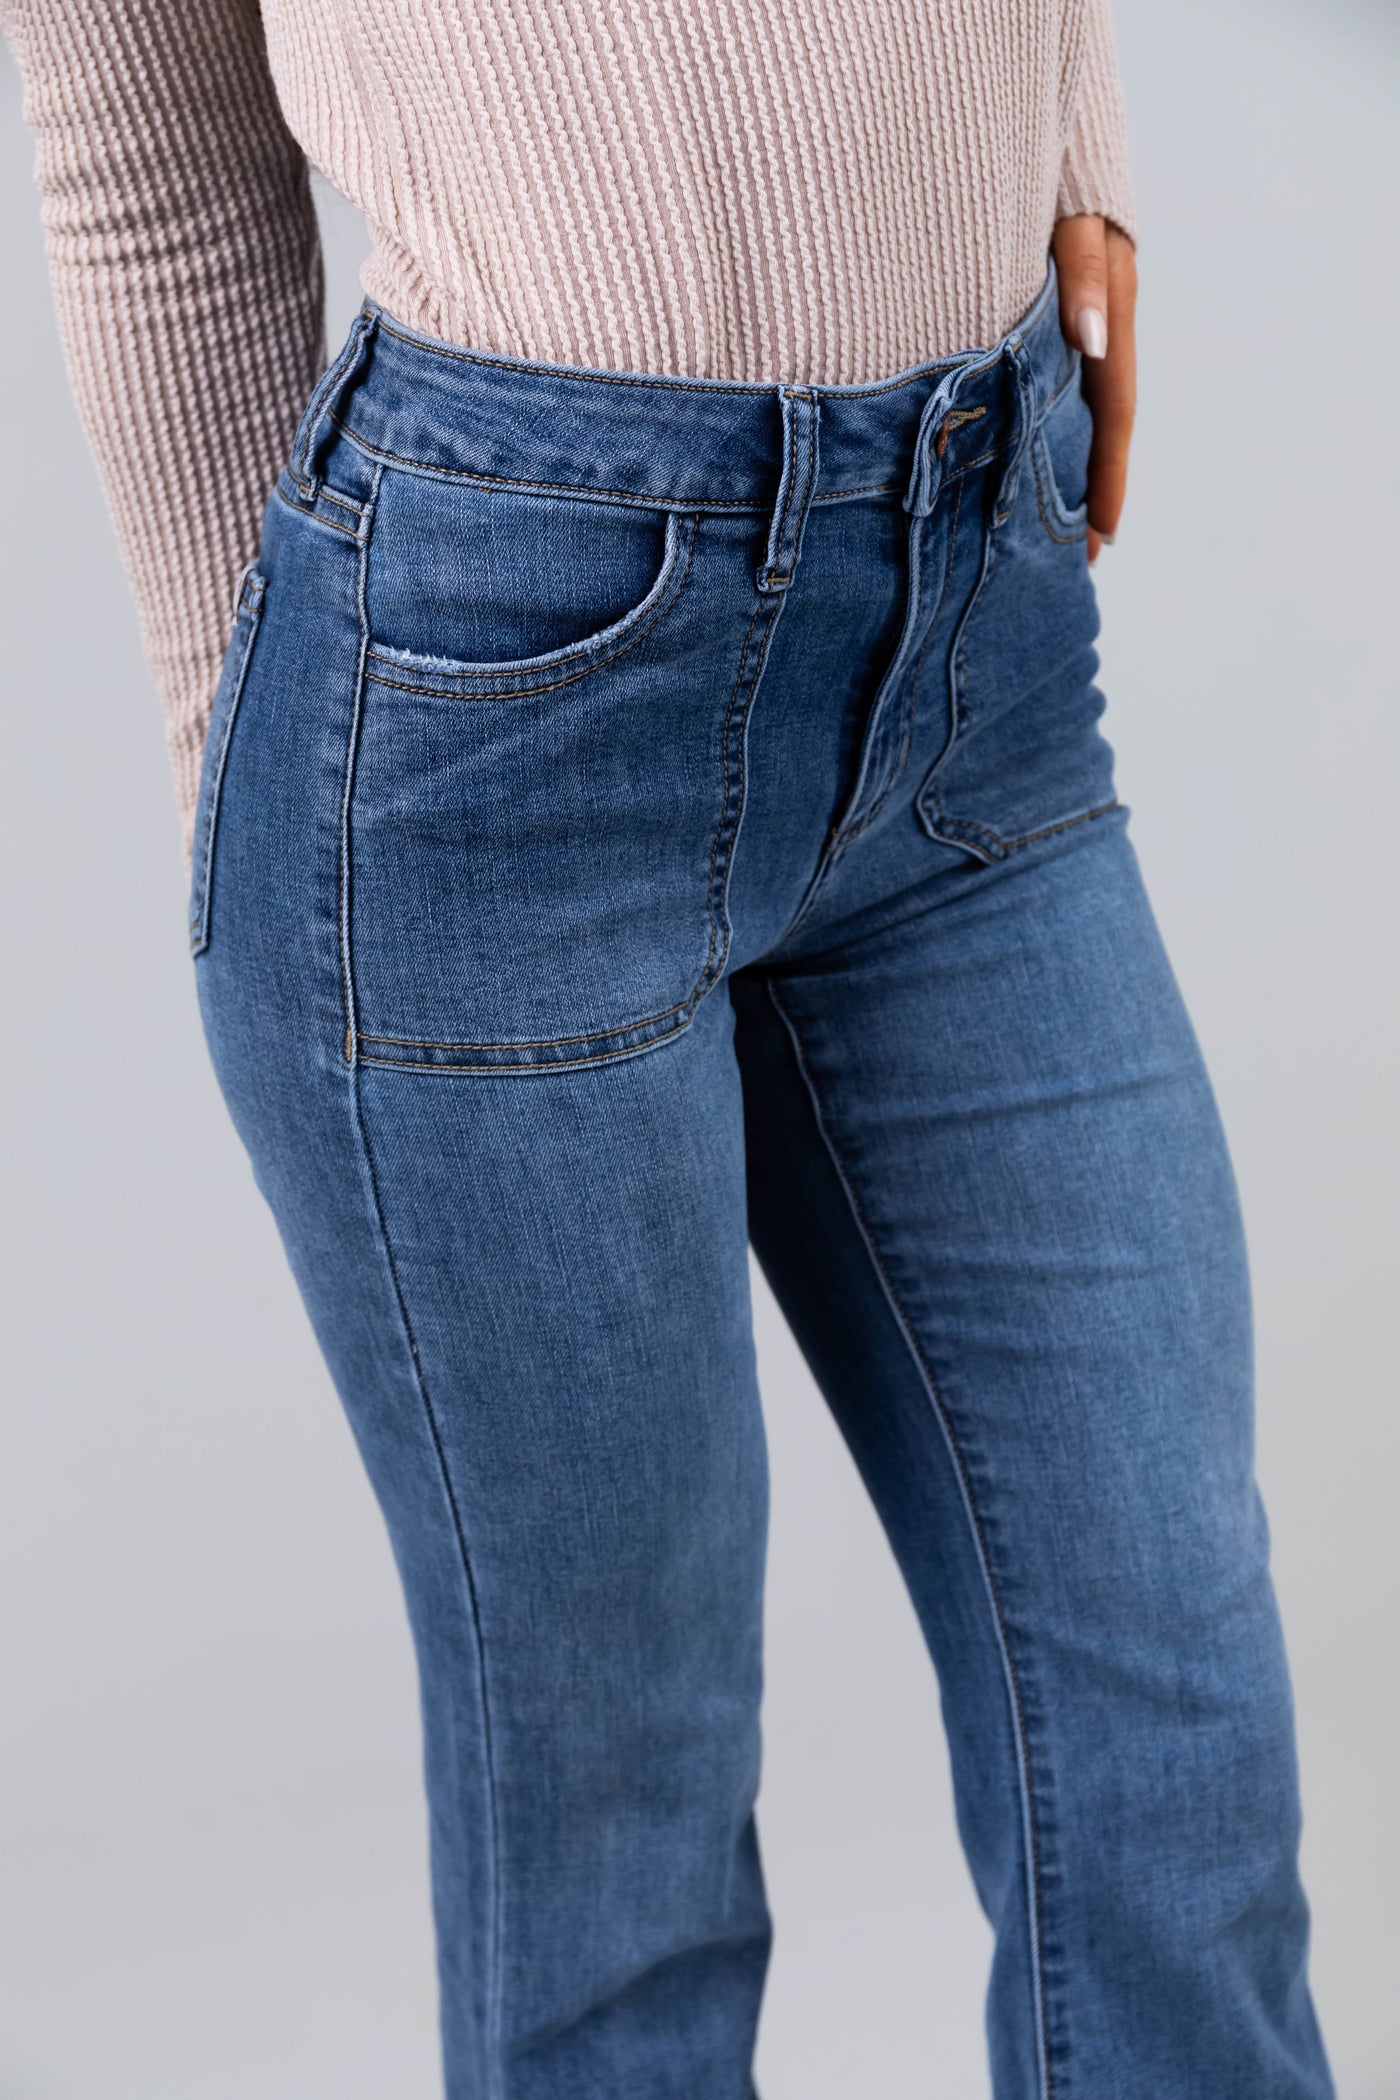 Sneak Peek Medium Wash Mid Rise Flare Jeans